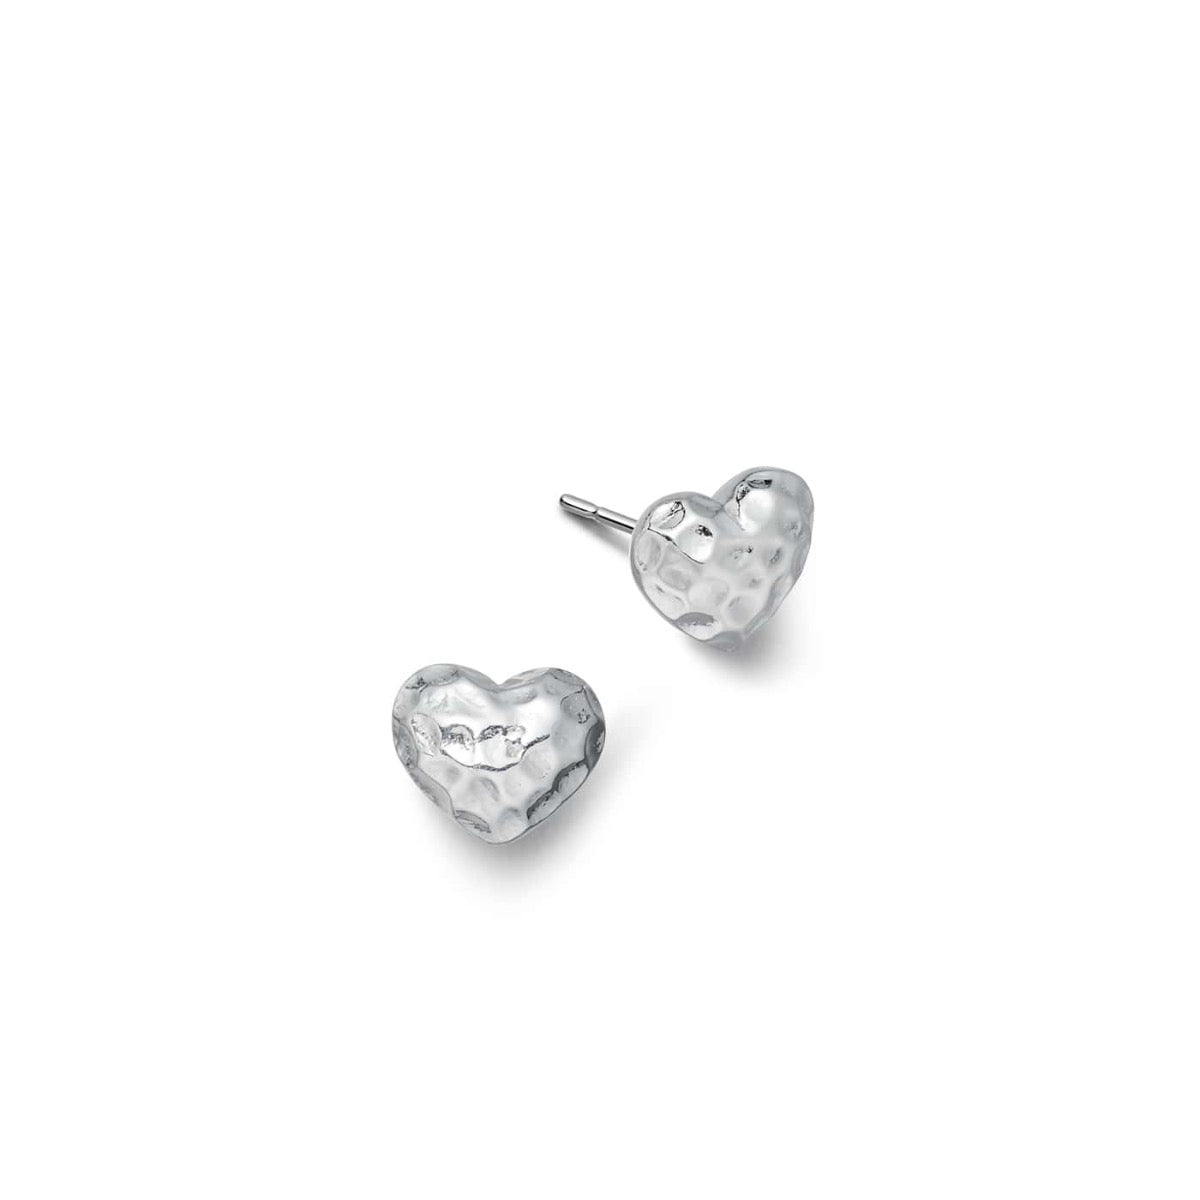 Silver hammered heart earrings